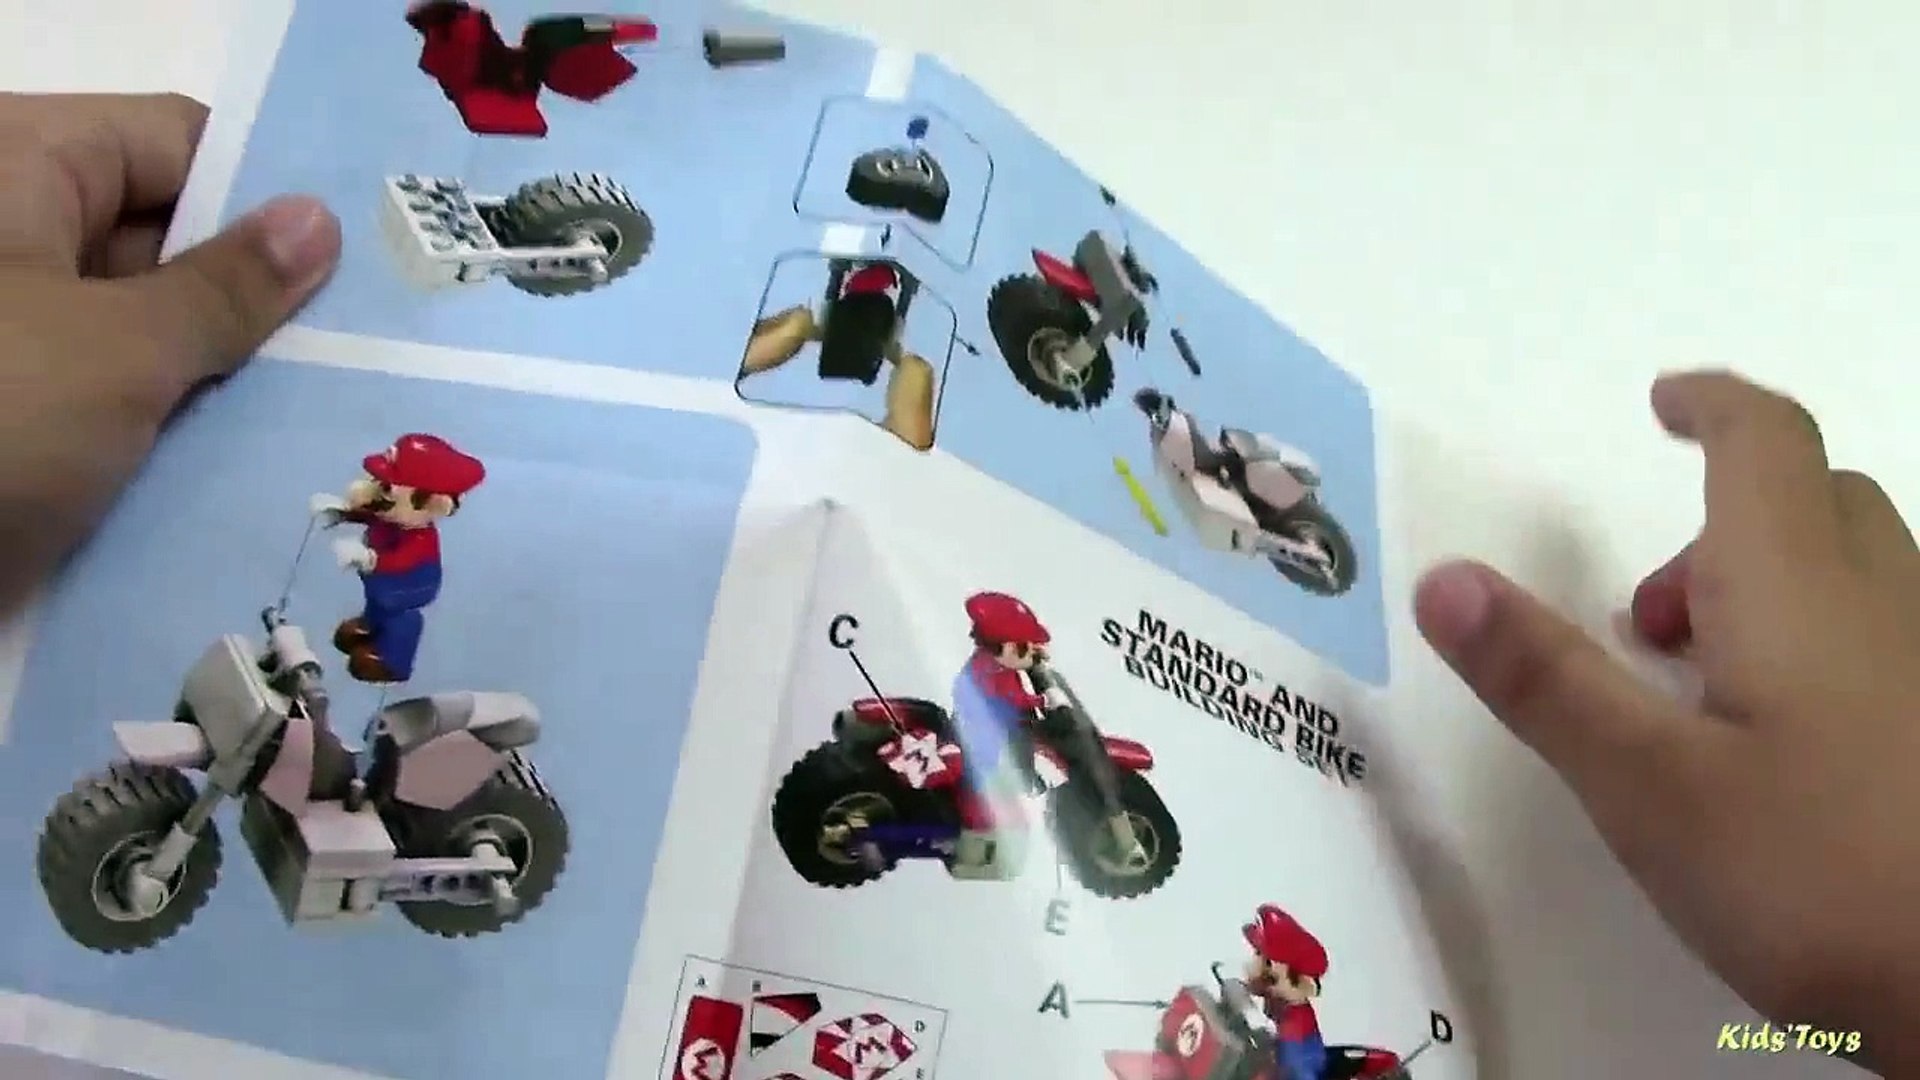 K'NEX Mario Kart 8 - Mario Bike Building Set